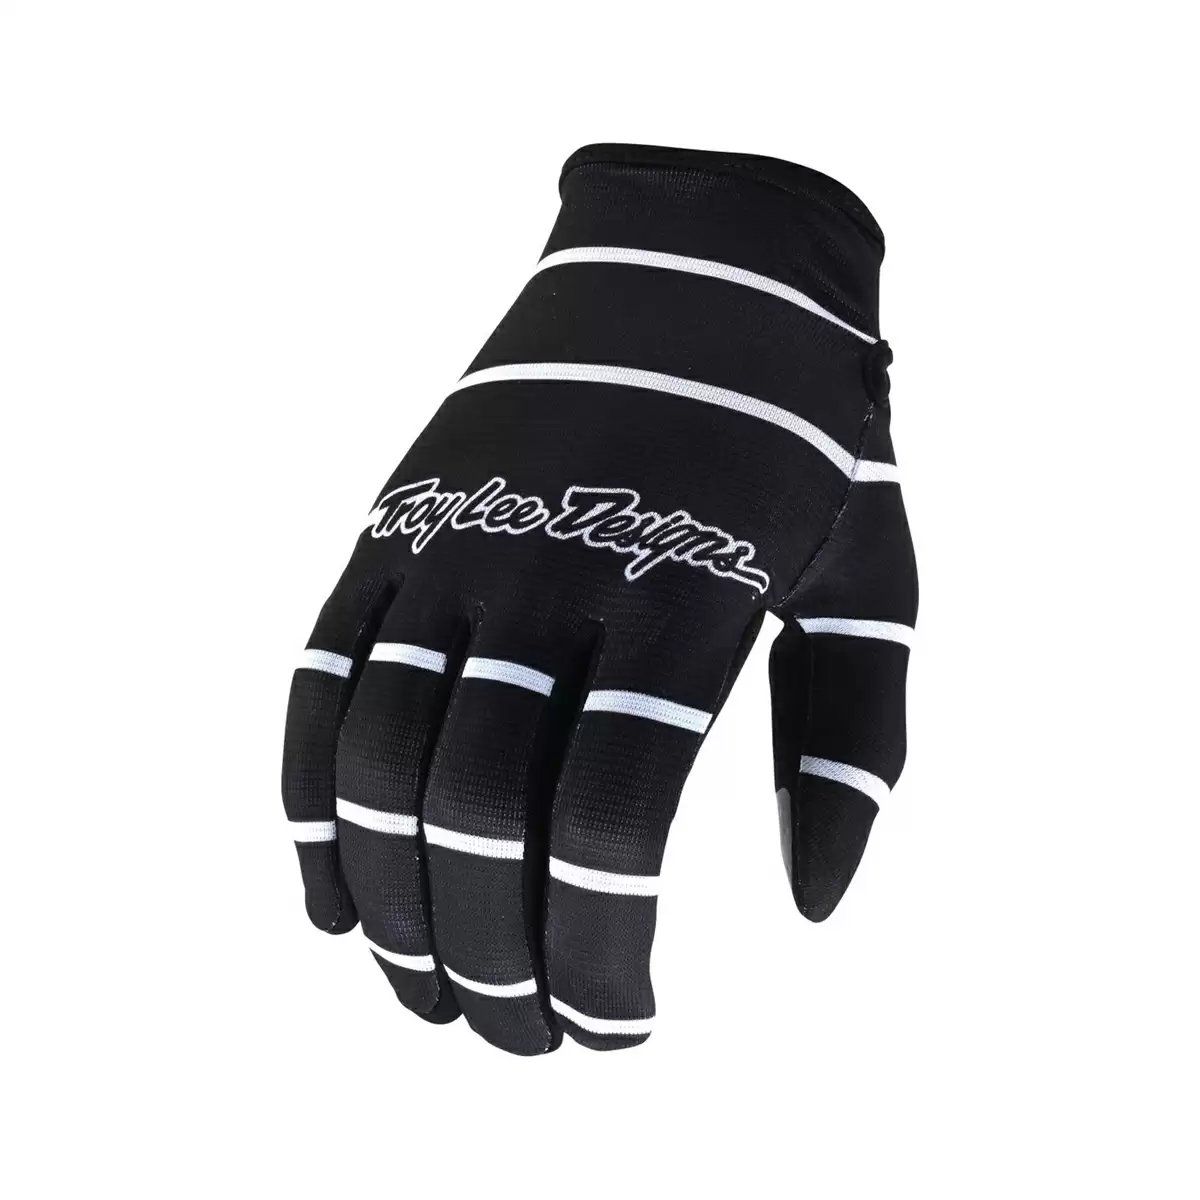 Gloves Flowline Stripe Black Size M - image